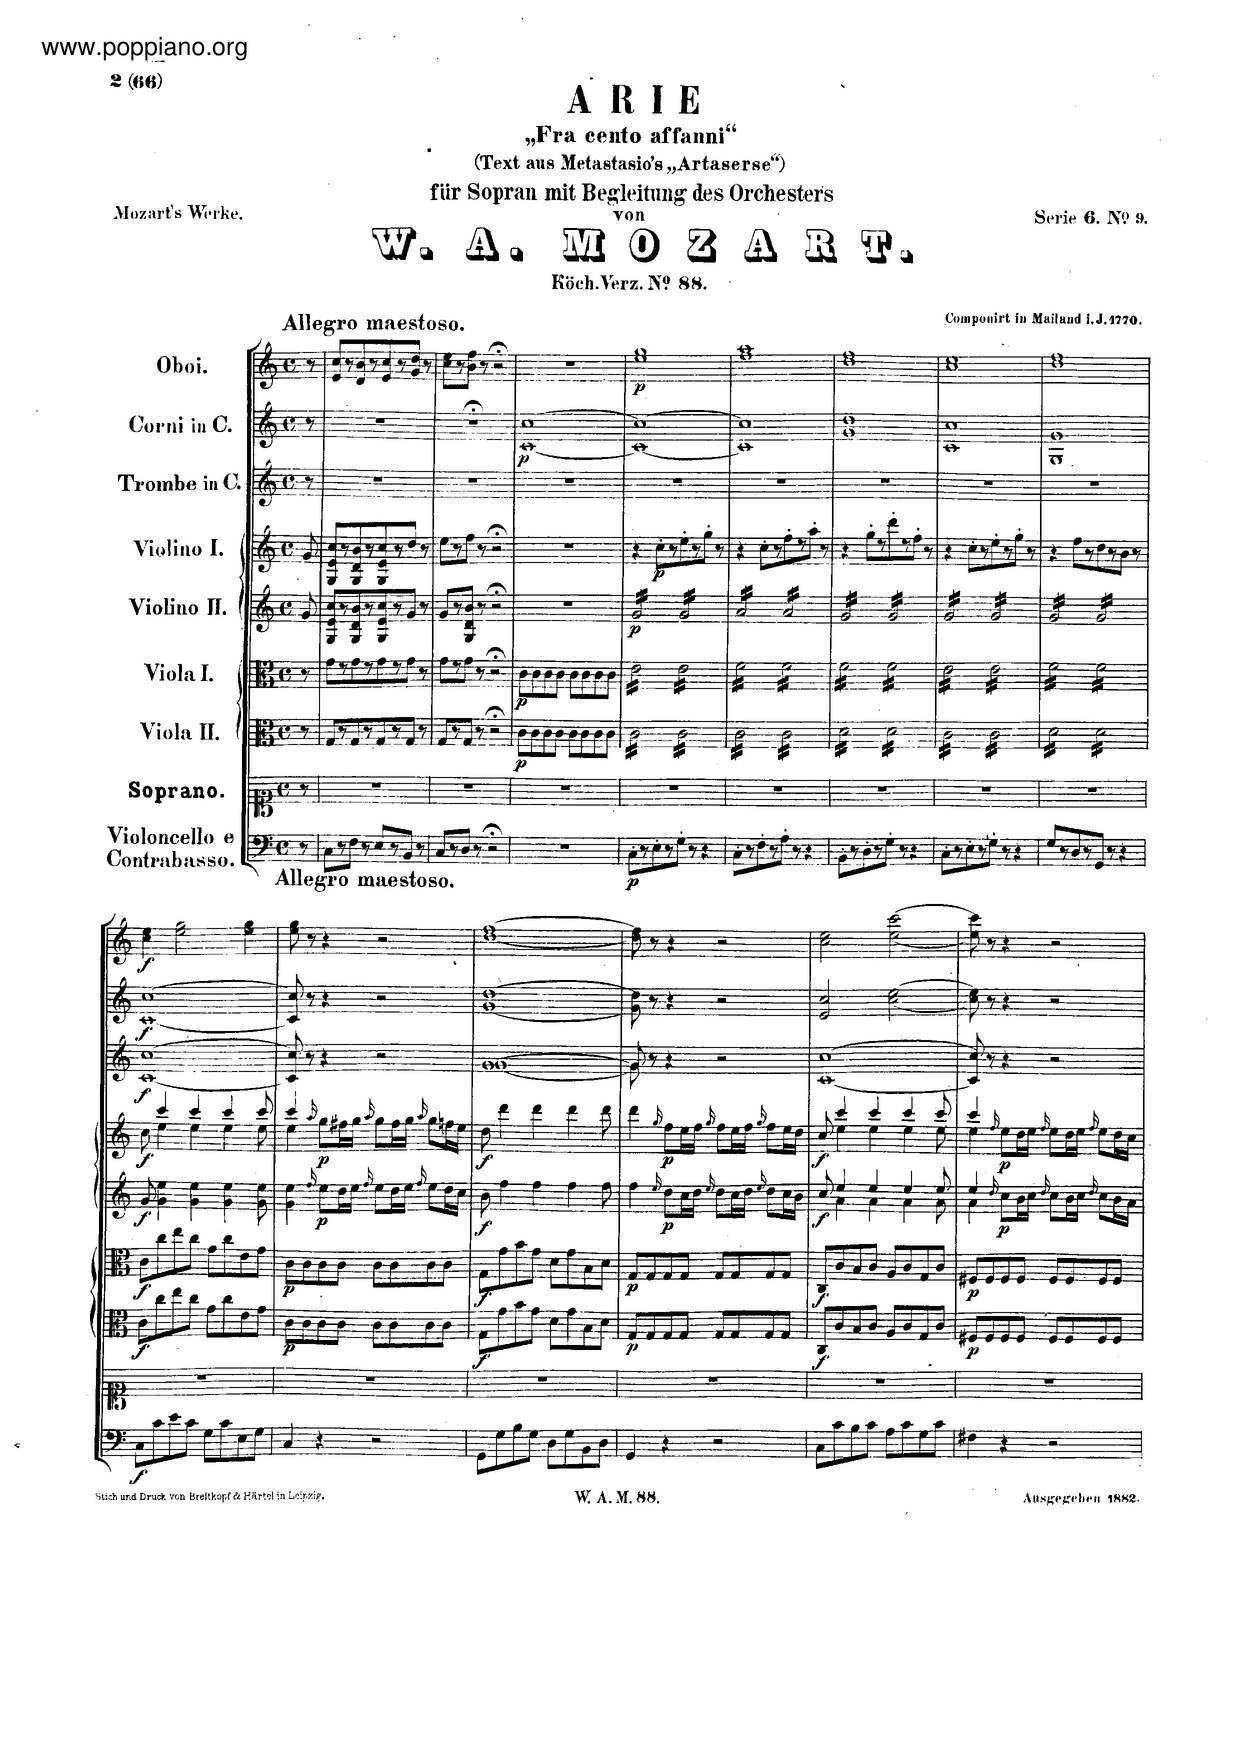 Fra Cento Affanni, K. 88/73Cピアノ譜